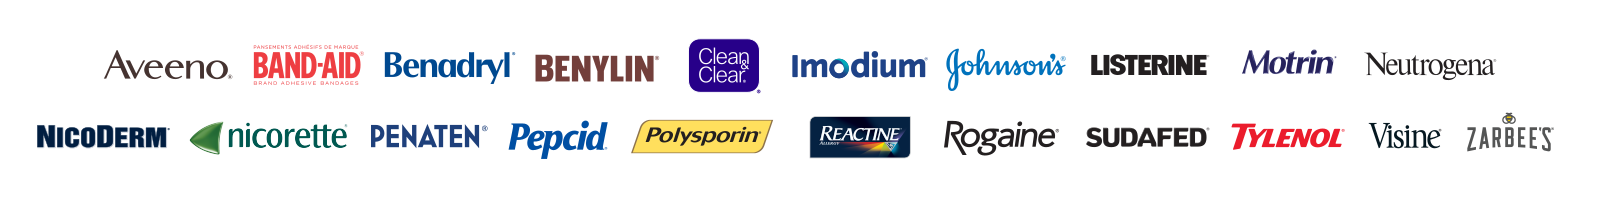 Logos of 21 Kenvue brands, including Aveeno, Band-Aid, Benadryl, Benylin, Clean & Clear, Imodium, Johnson’s, Listerine, Motrin, Neutrogena, Nicoderm, Nicorette, Penaten, Pepcid, Polysporin, Reactine, Rogaine, Sudafed, Tylenol, Visine and Zarbee's